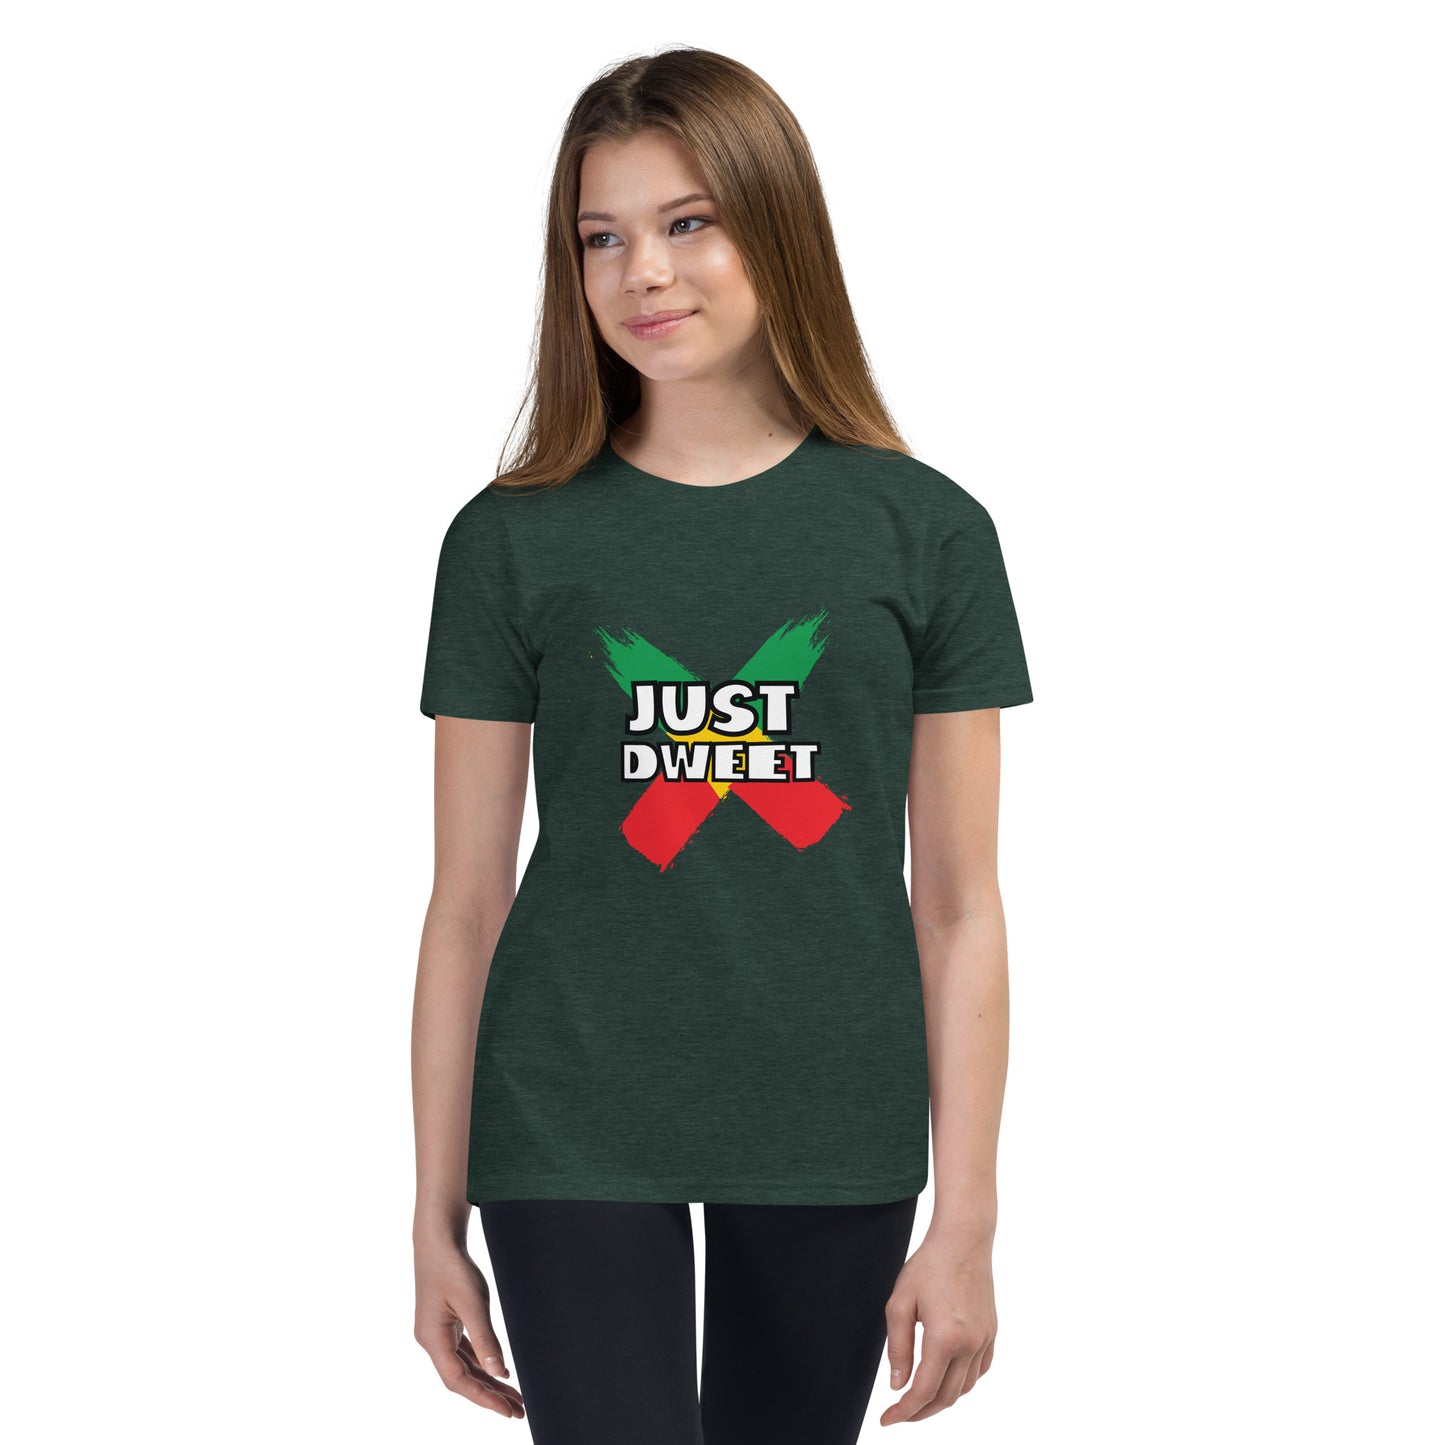 Youth Short Sleeve "Just Dweet" T-Shirt